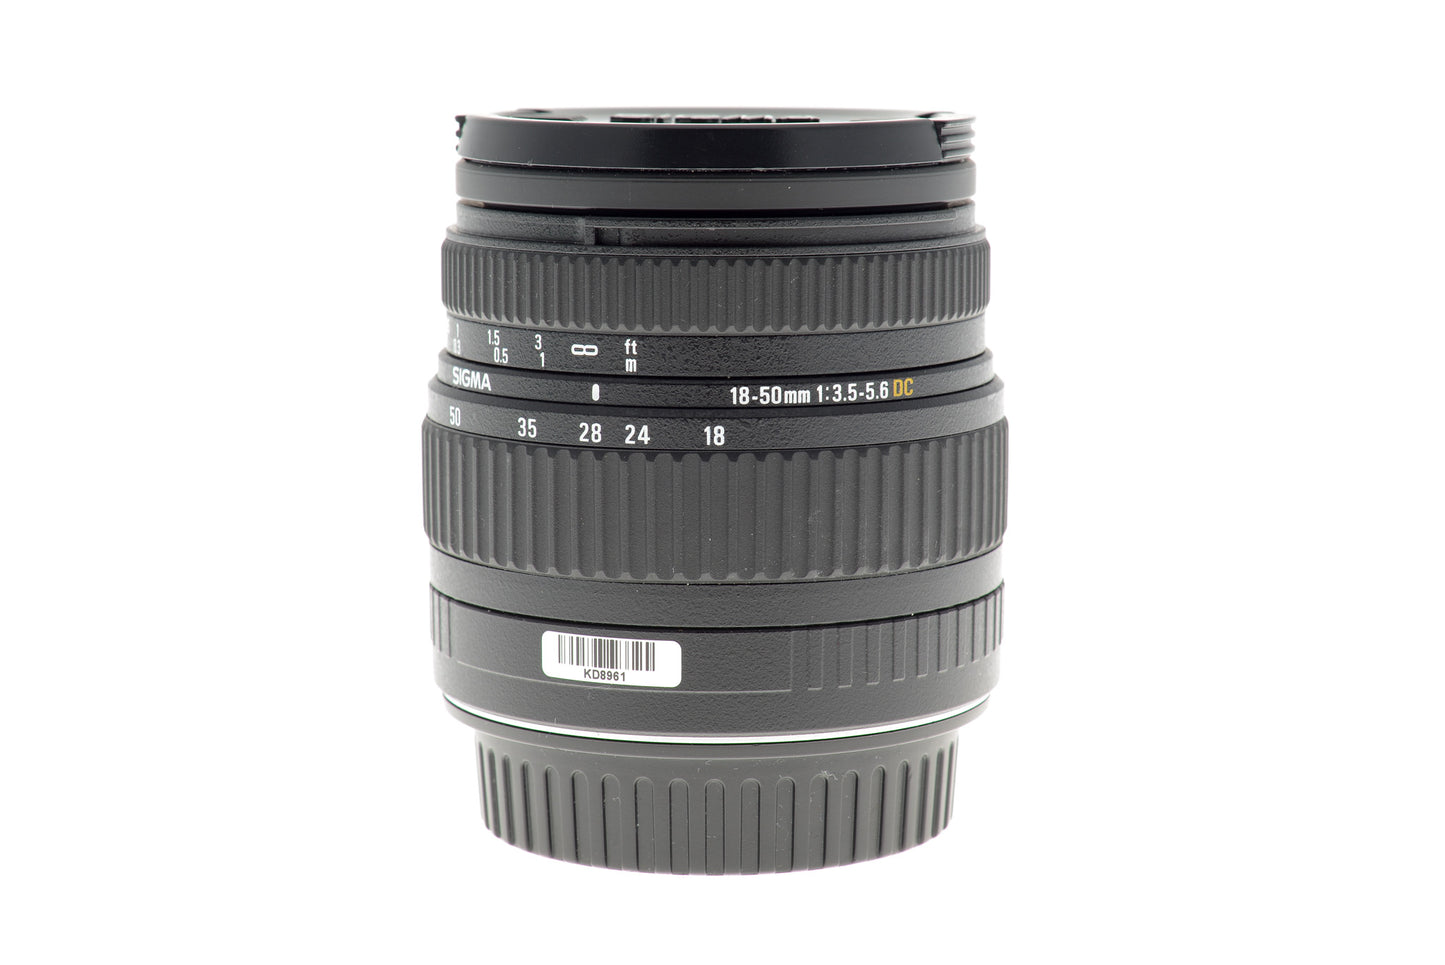 Sigma 18-50mm f3.5-5.6 DC - Lens